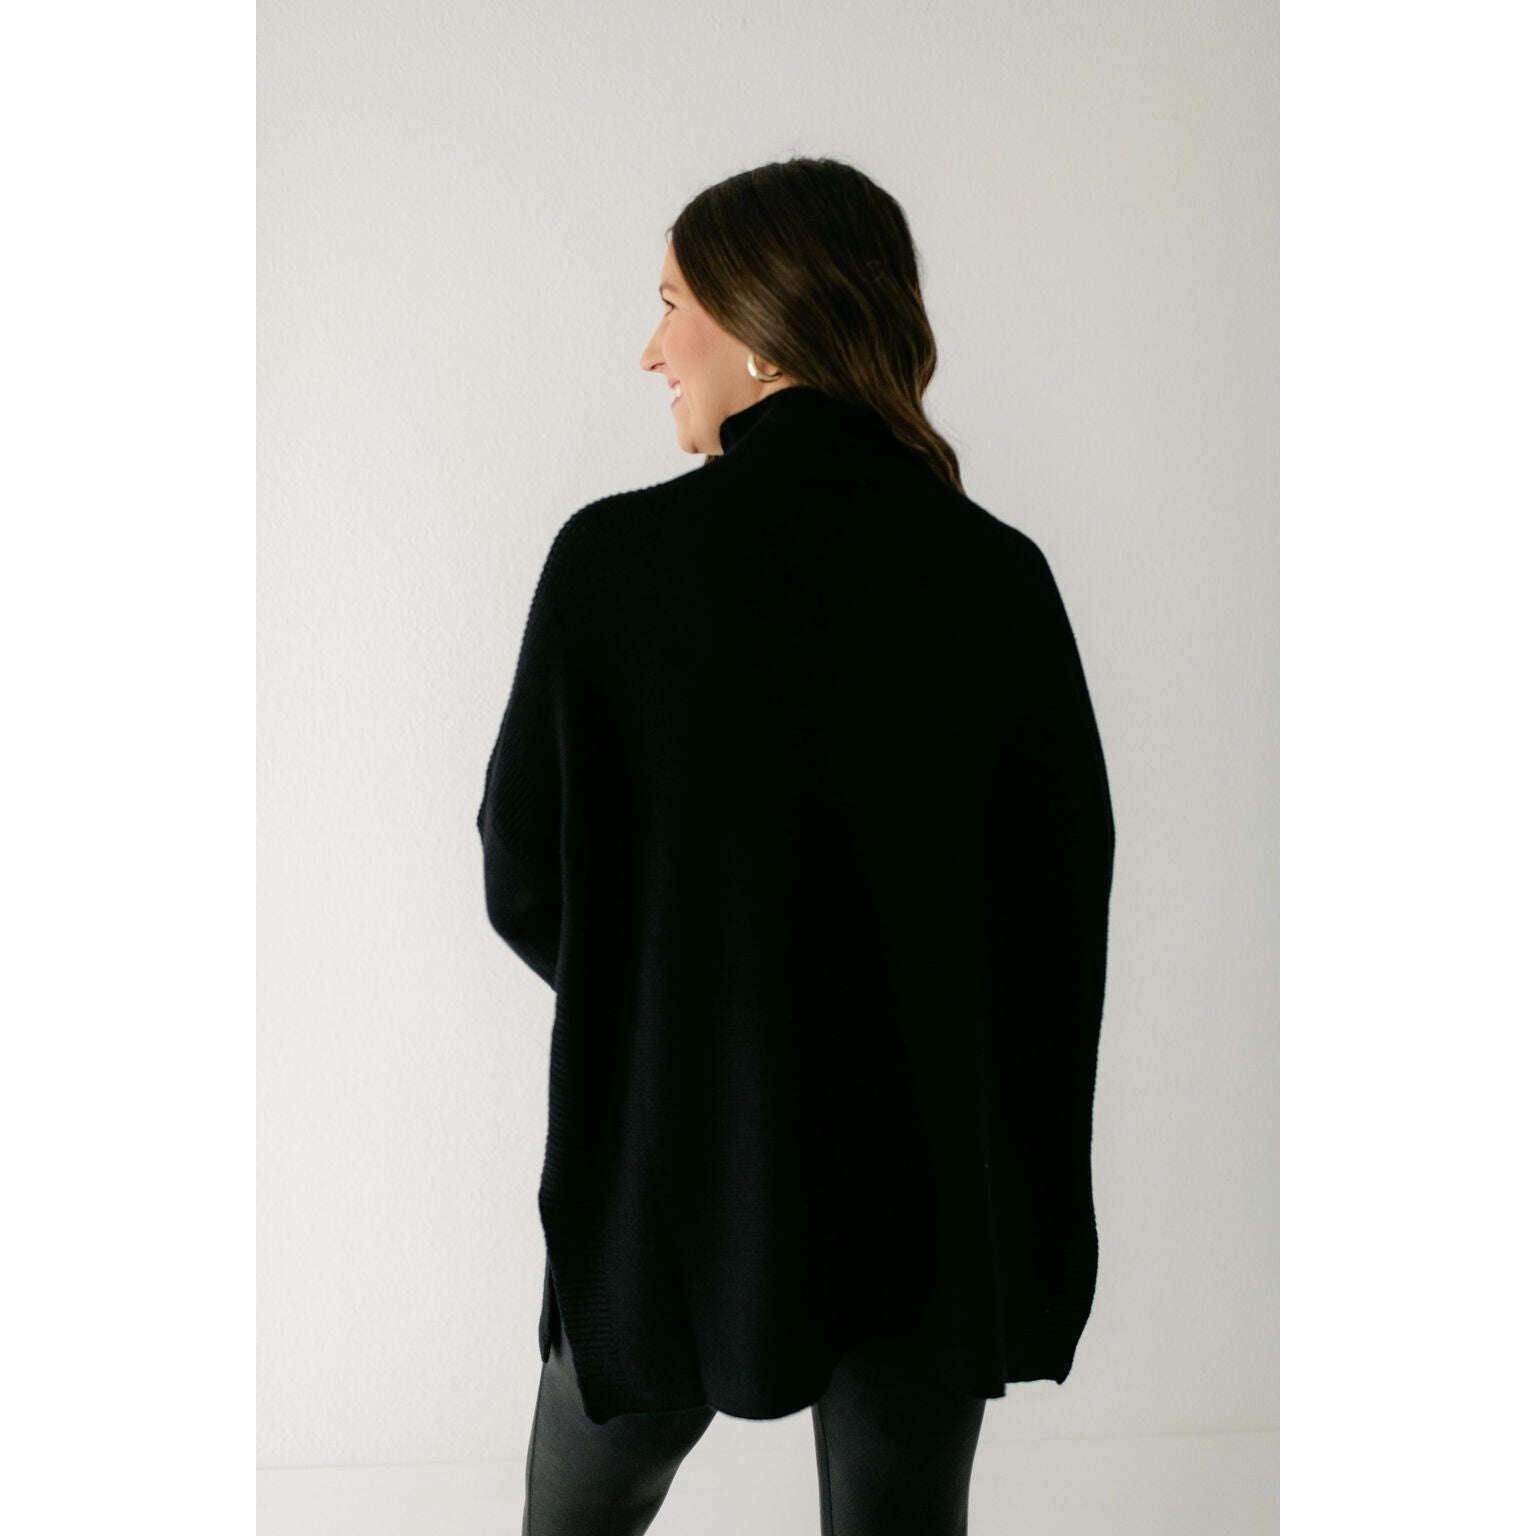 8.28 Boutique:Kerisma Knits,Kerisma Knits Boho Tunic in Black,Sweaters